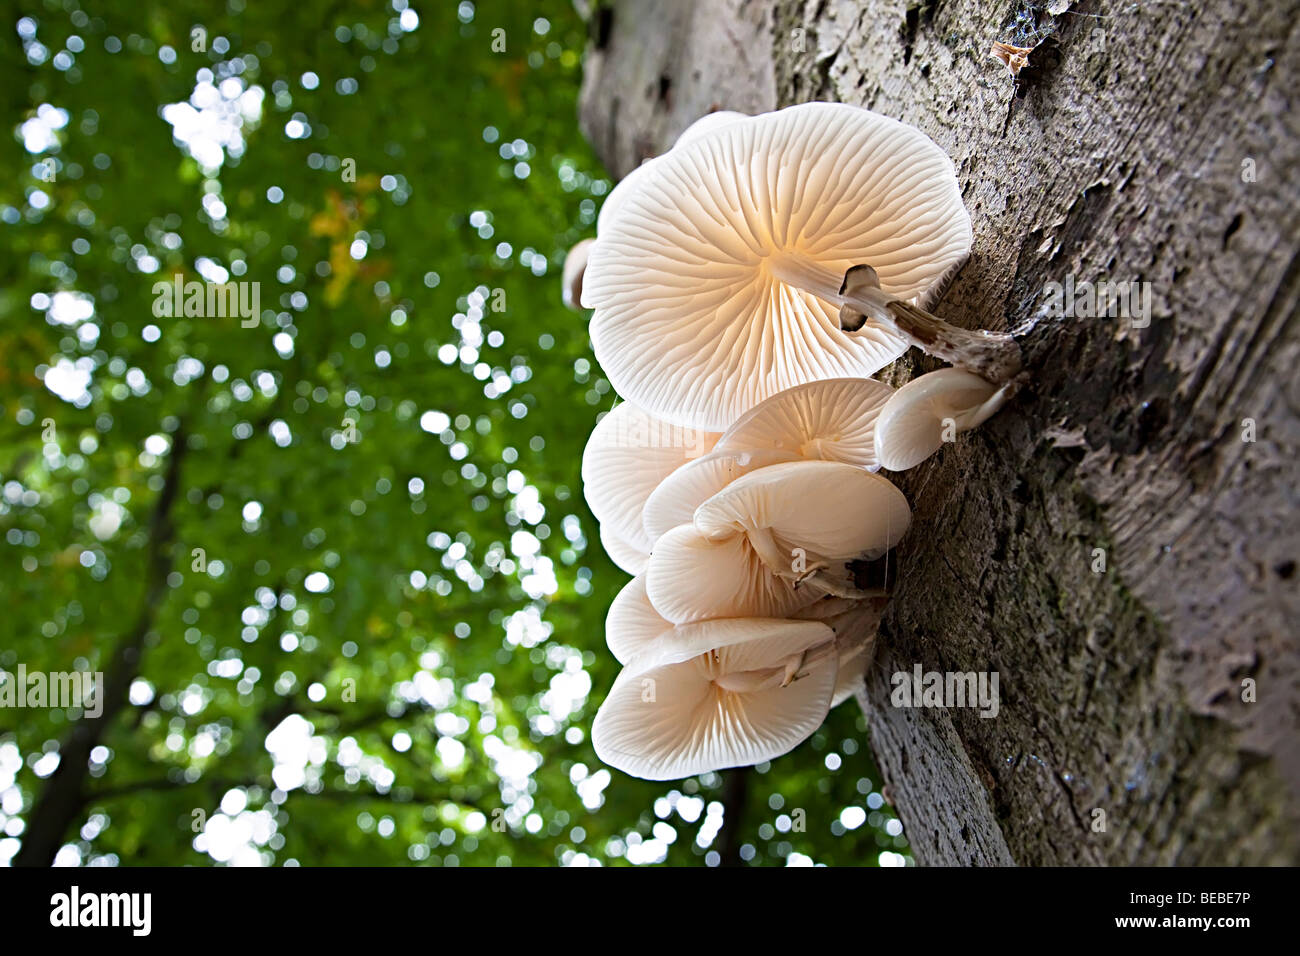 Parasitic fungus on living tree Wales UK Stock Photo